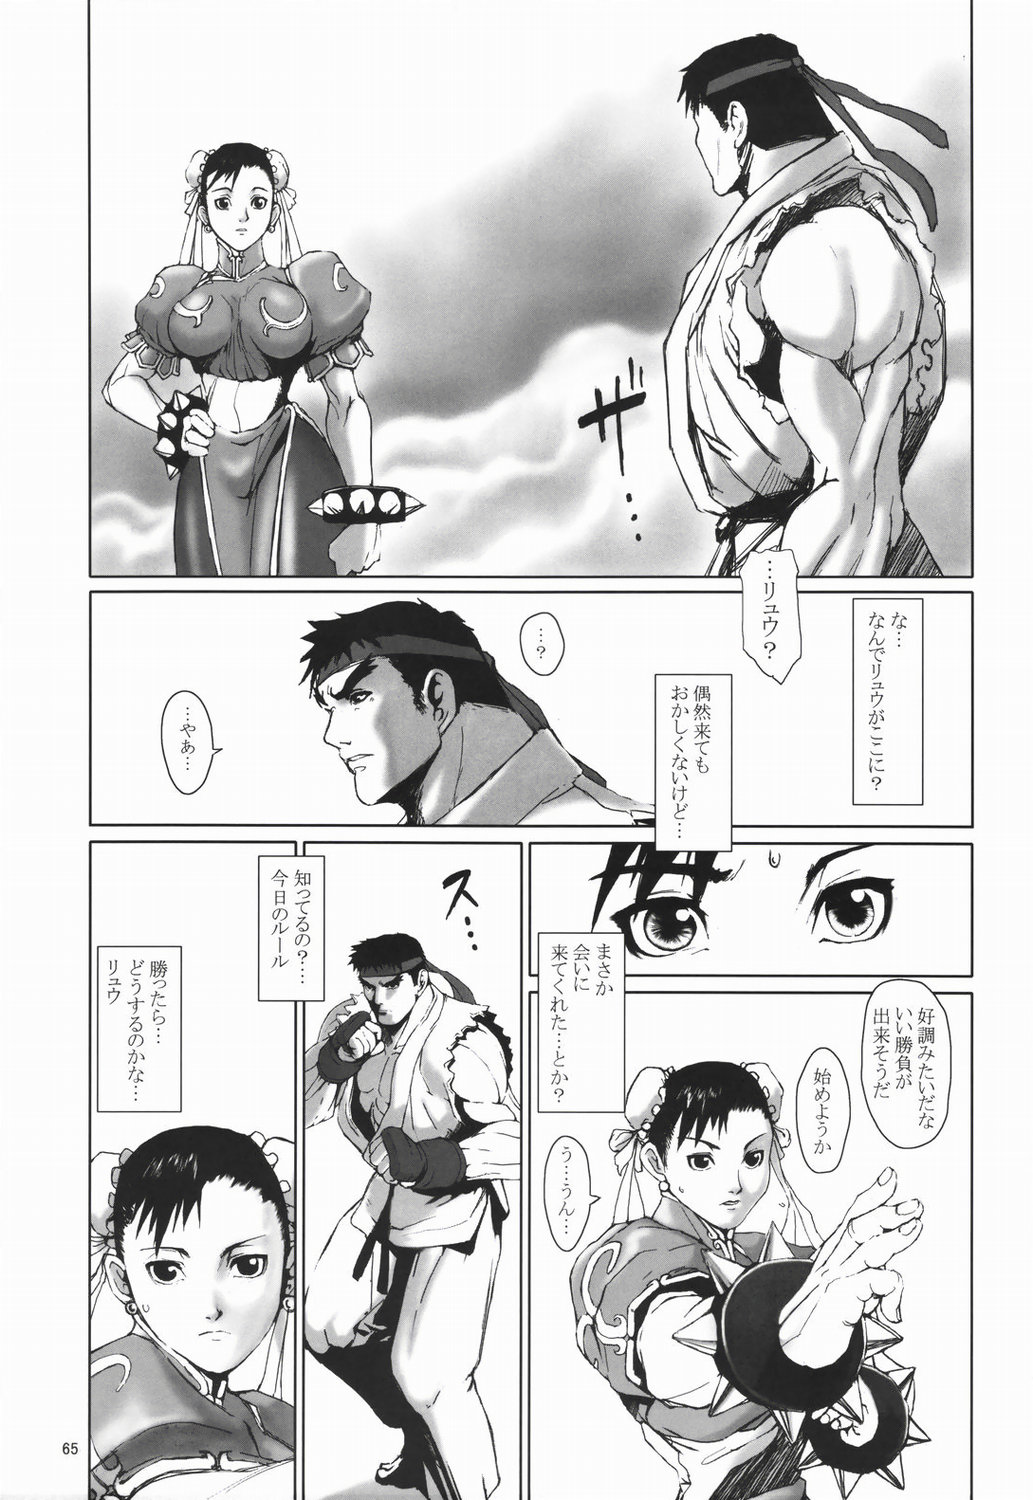 [Hanshihanshou (Noukyuu / Noukyu / Noq)] Fight For The No Future BB (Street Fighter) (Jap) [半死半生 (のうきゅう)] FIGHT FOR THE NO FUTURE BB （ストリートファイターII）